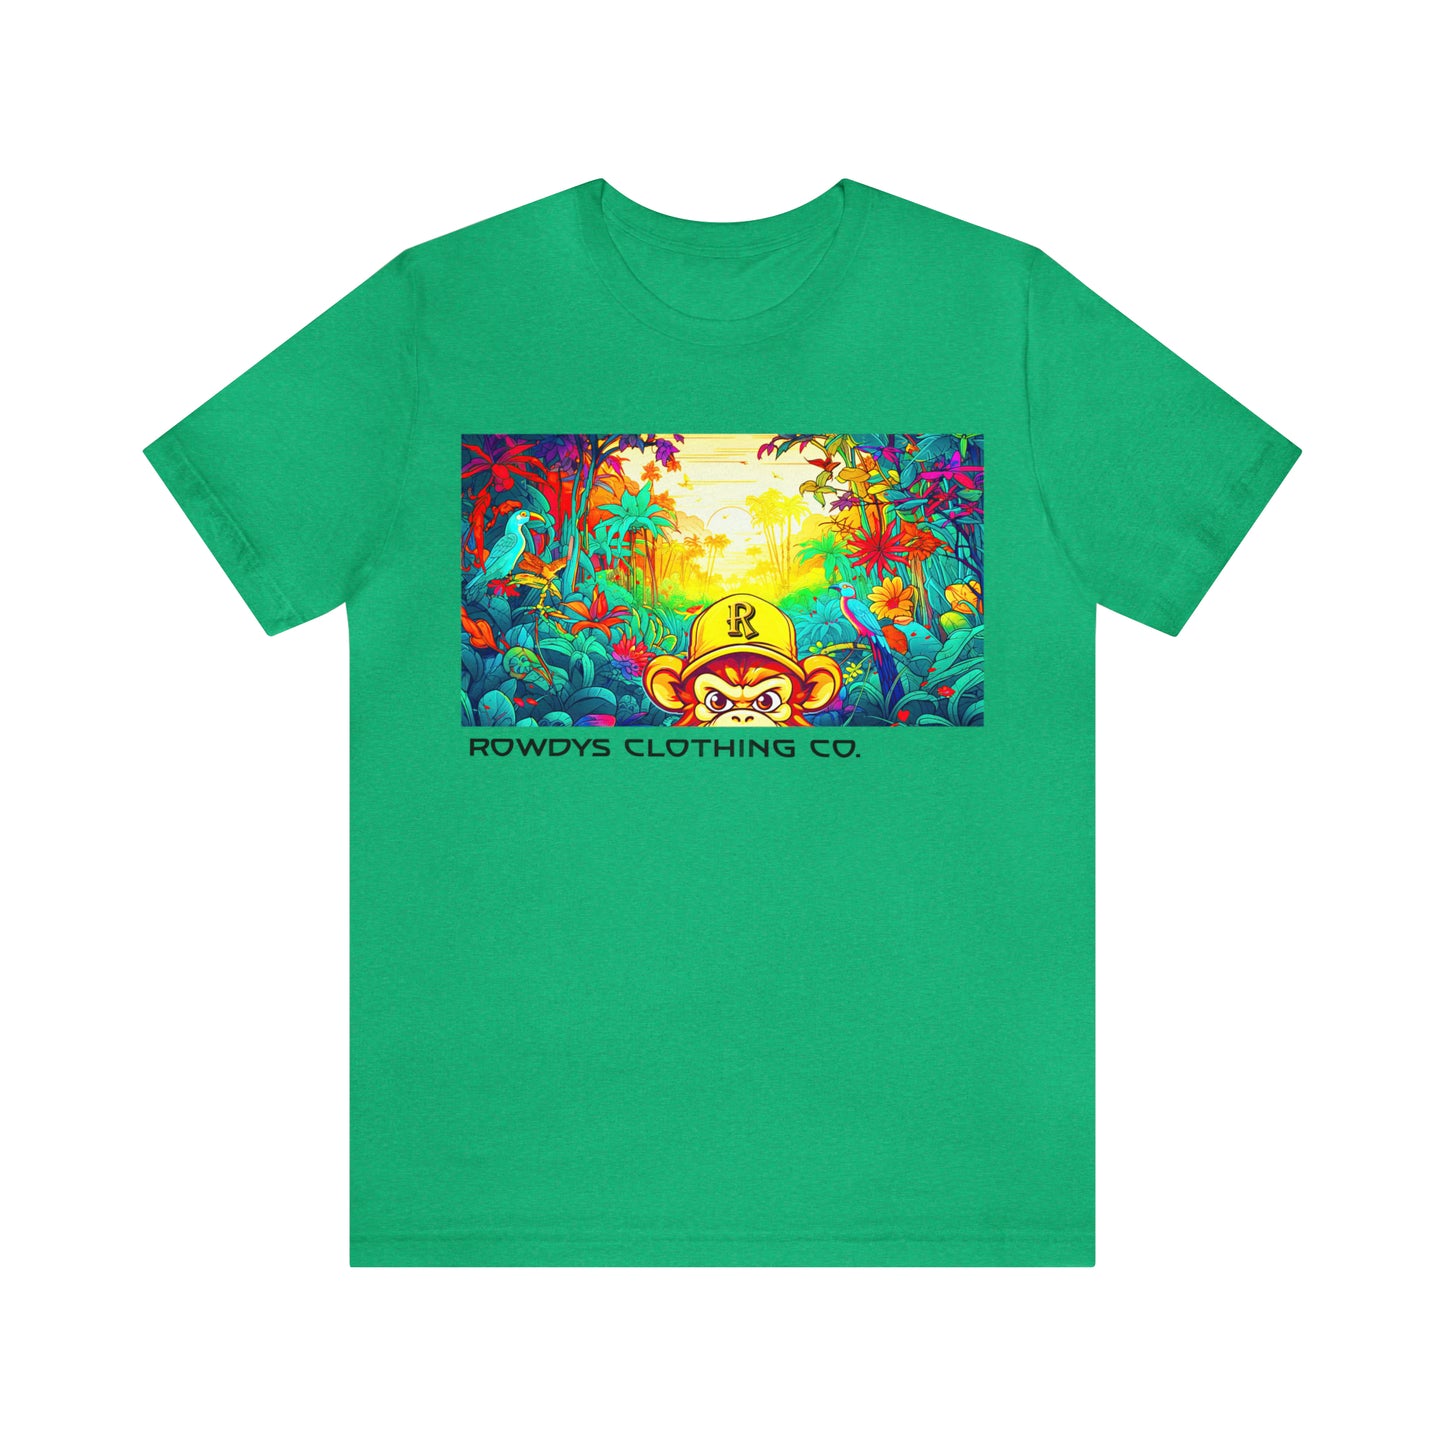 Rowdy's Clothing Co. Monkey T-shirt - Original Rowdy's Brand T-Shirt